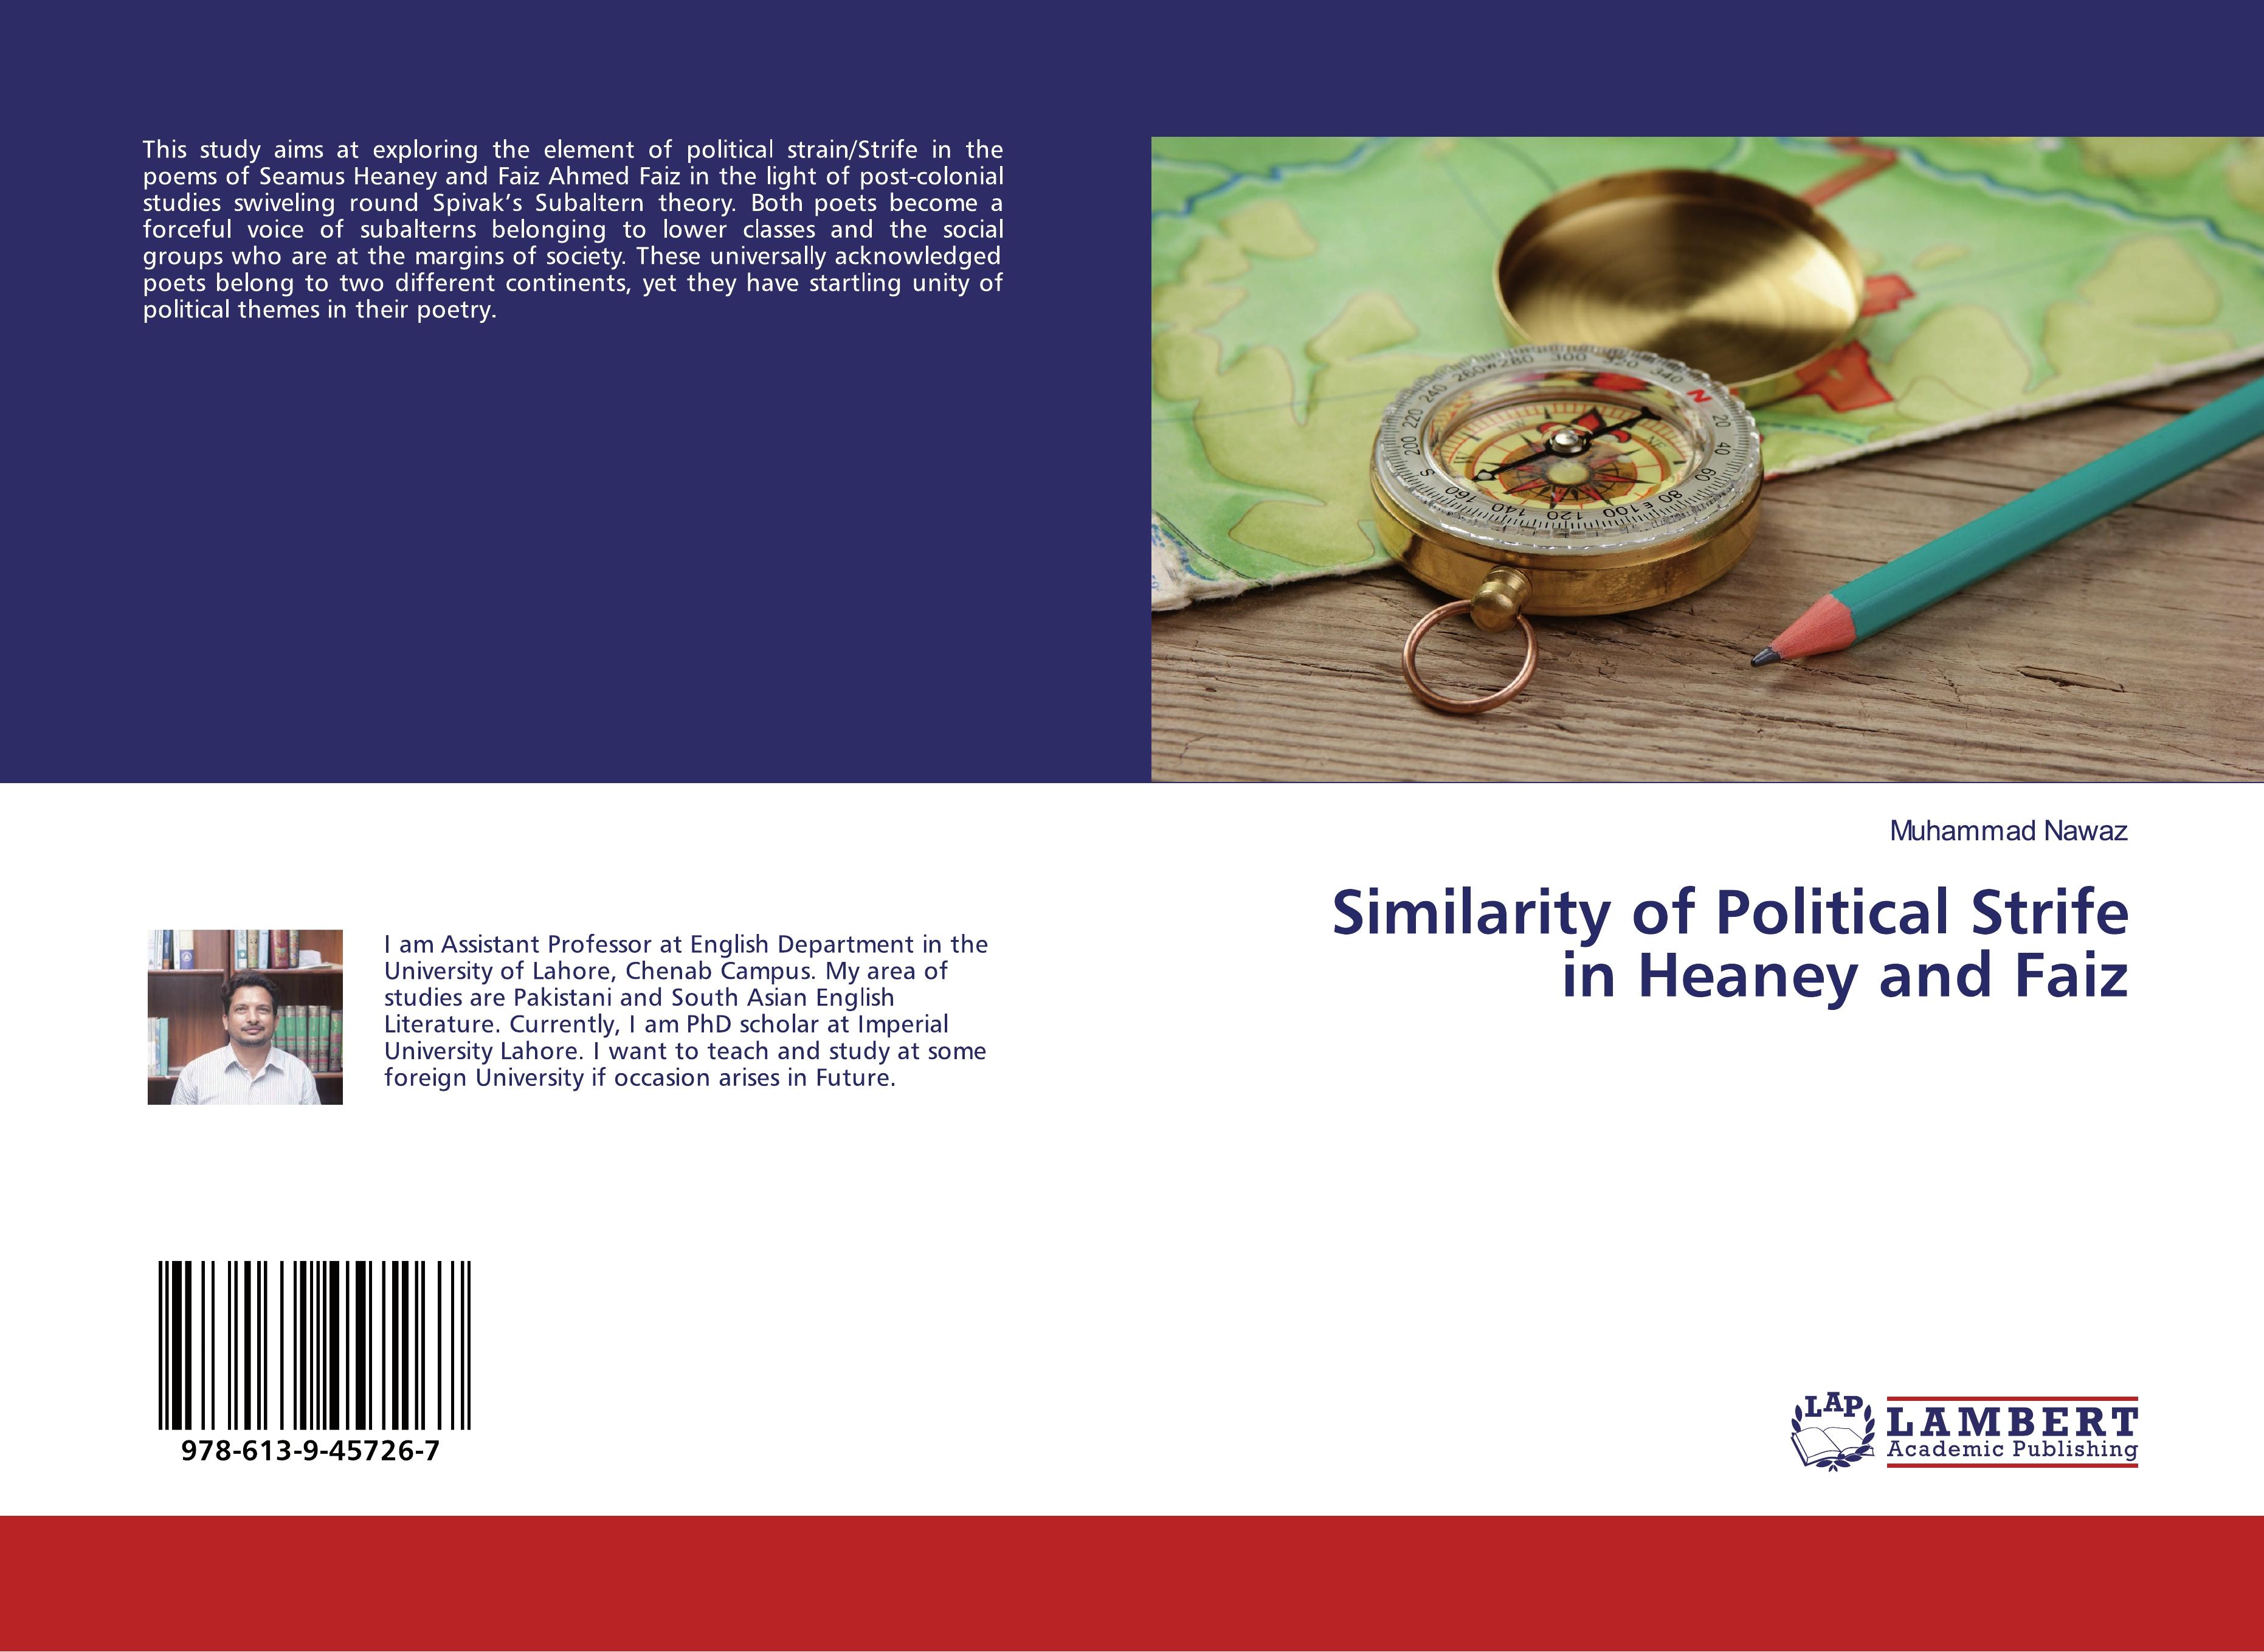 Similarity of Political Strife in Heaney and Faiz - Muhammad Nawaz